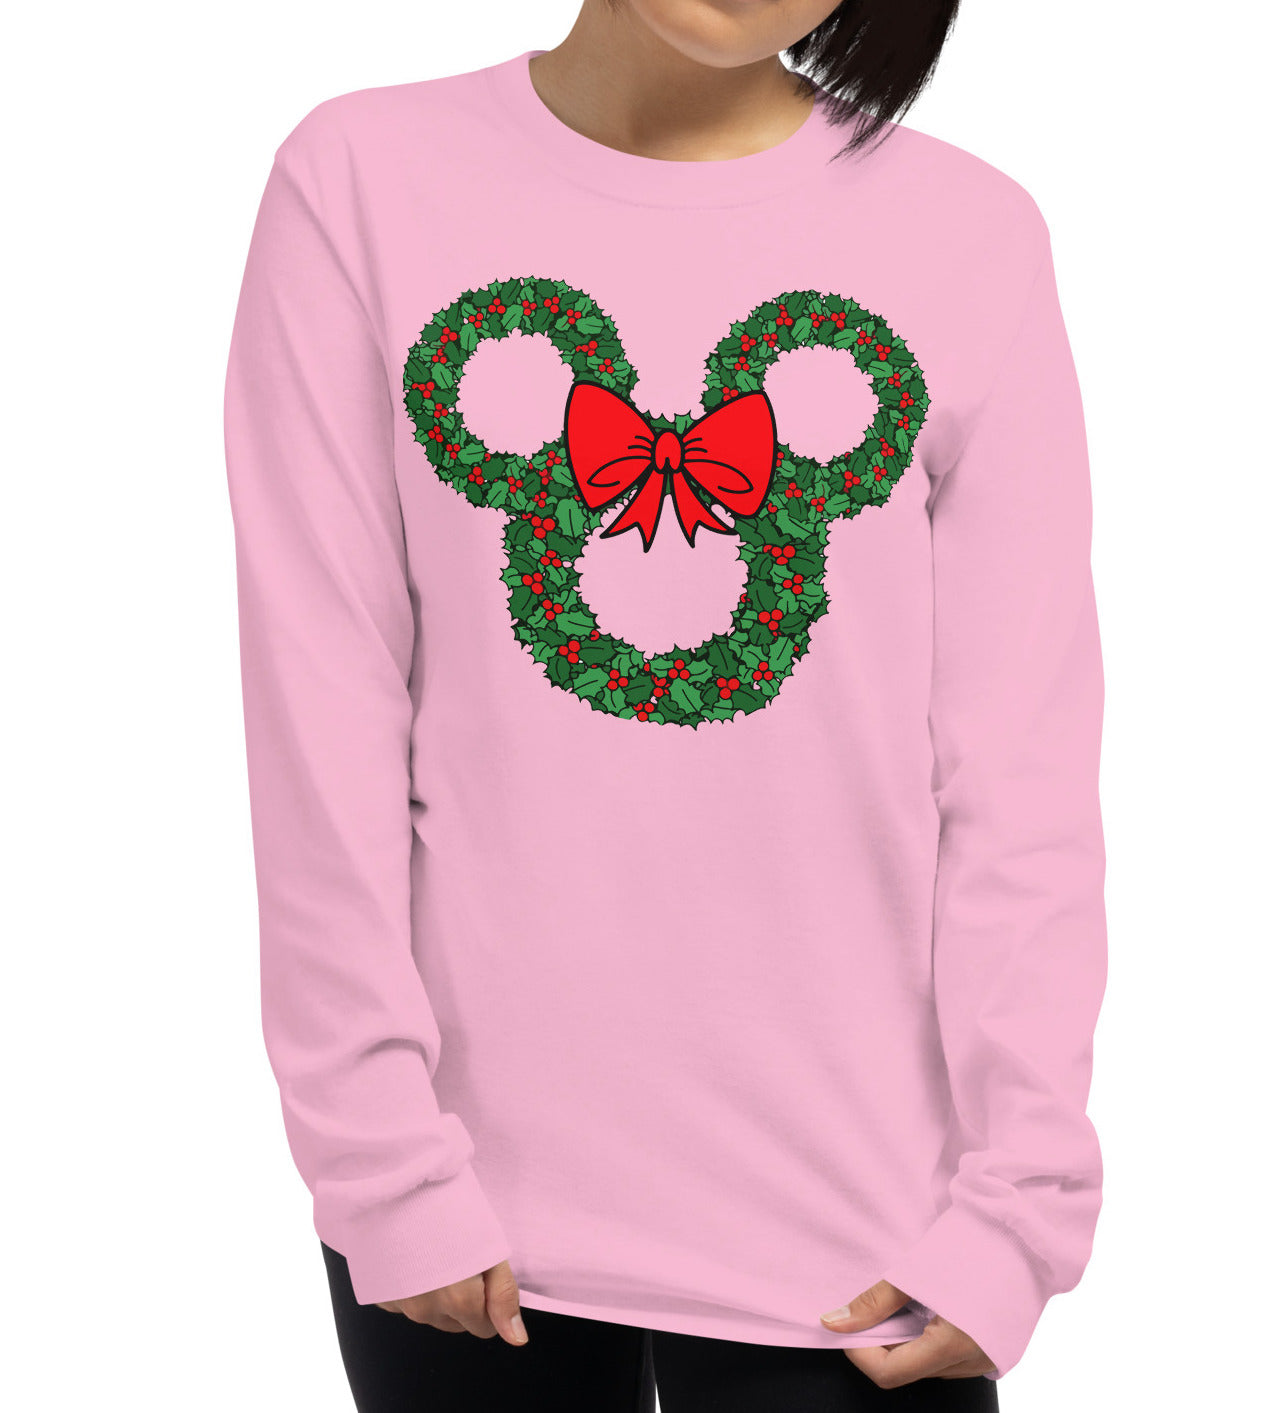 Monogrammed 'Minnie Christmas Wreath' Basic Long Sleeve T-Shirt